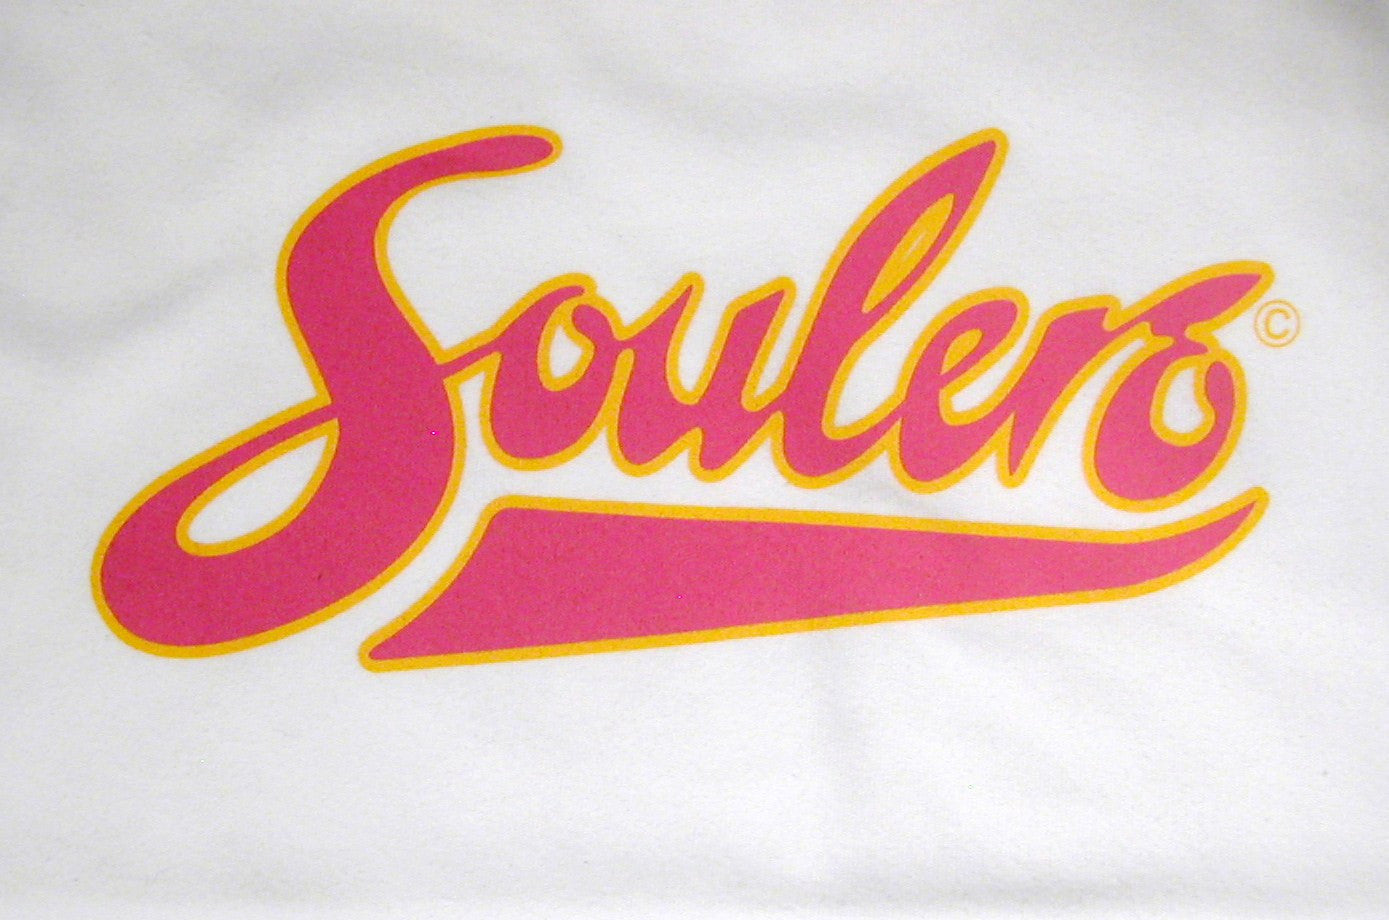 Soulero Baseball Babe T-Shirt (Pink/White)